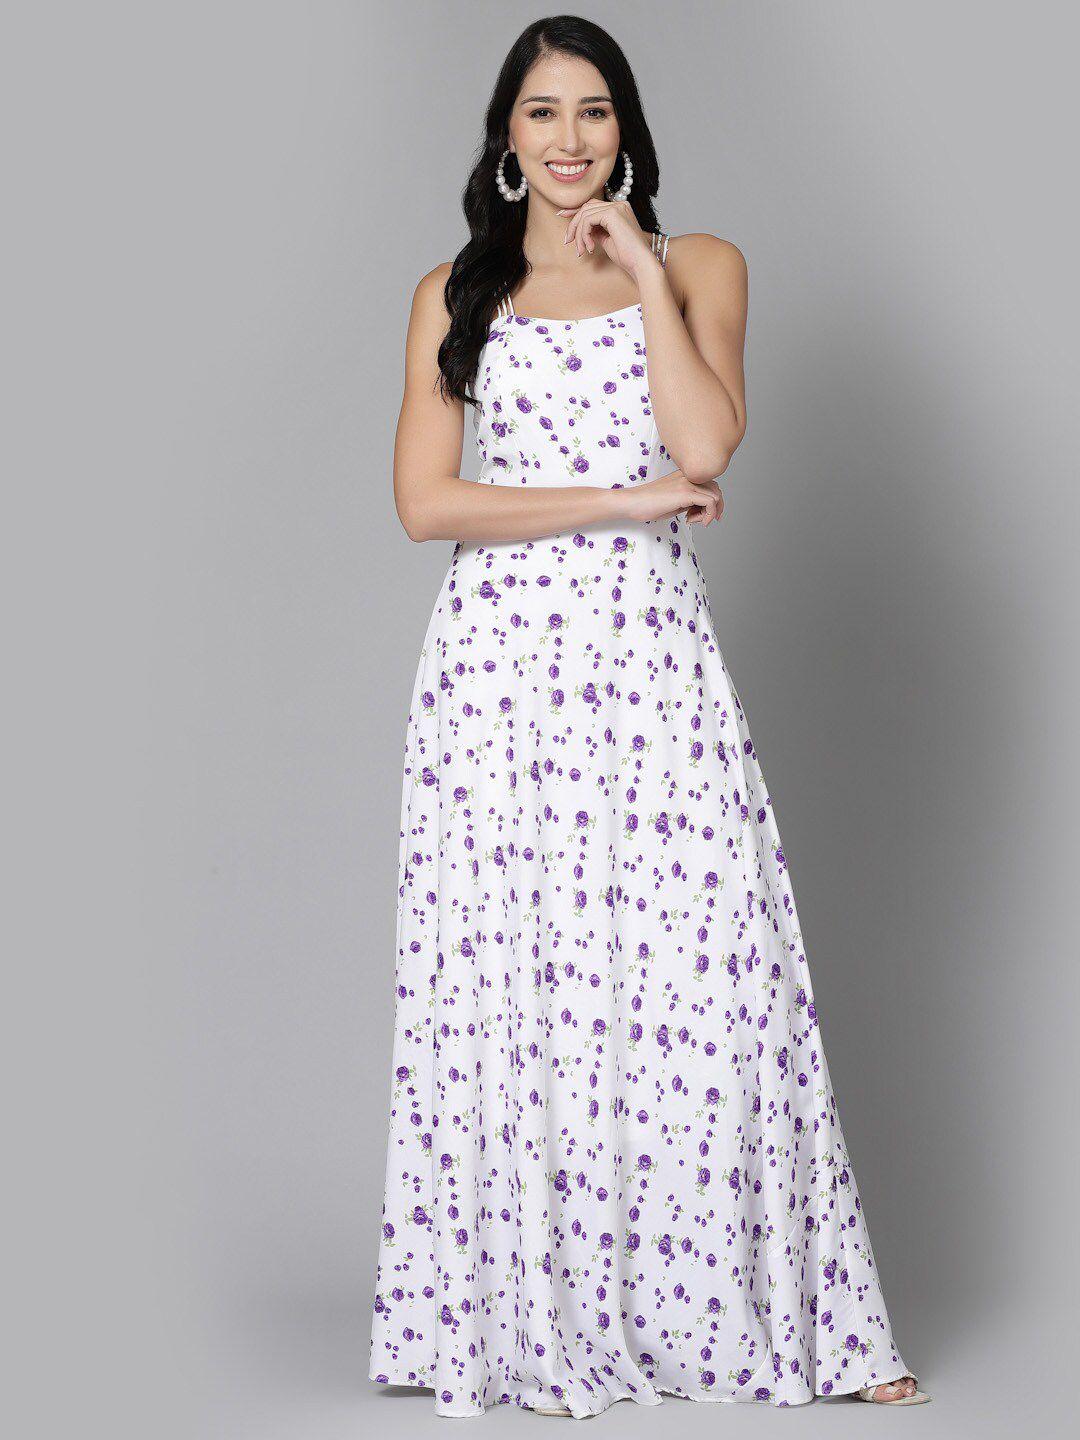 aayu floral printed shoulder straps sleeveless maxi dress